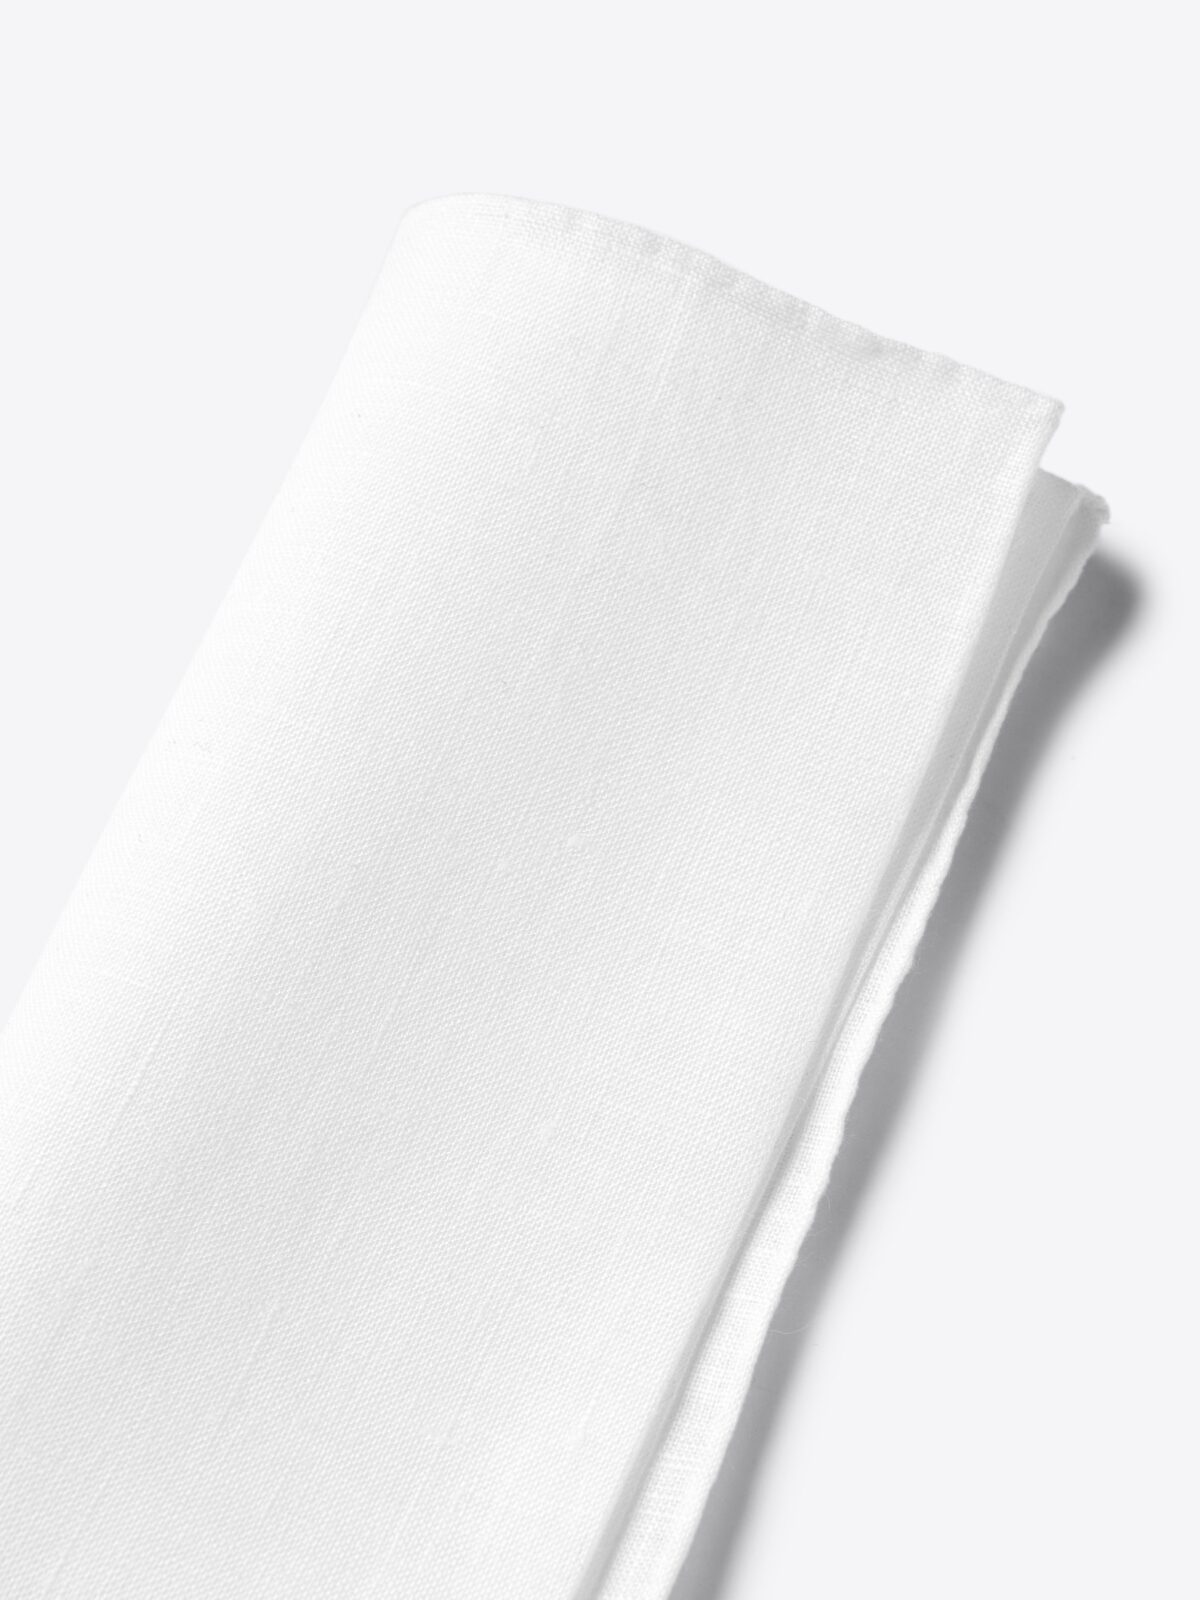 Essential White Linen Pocket Square